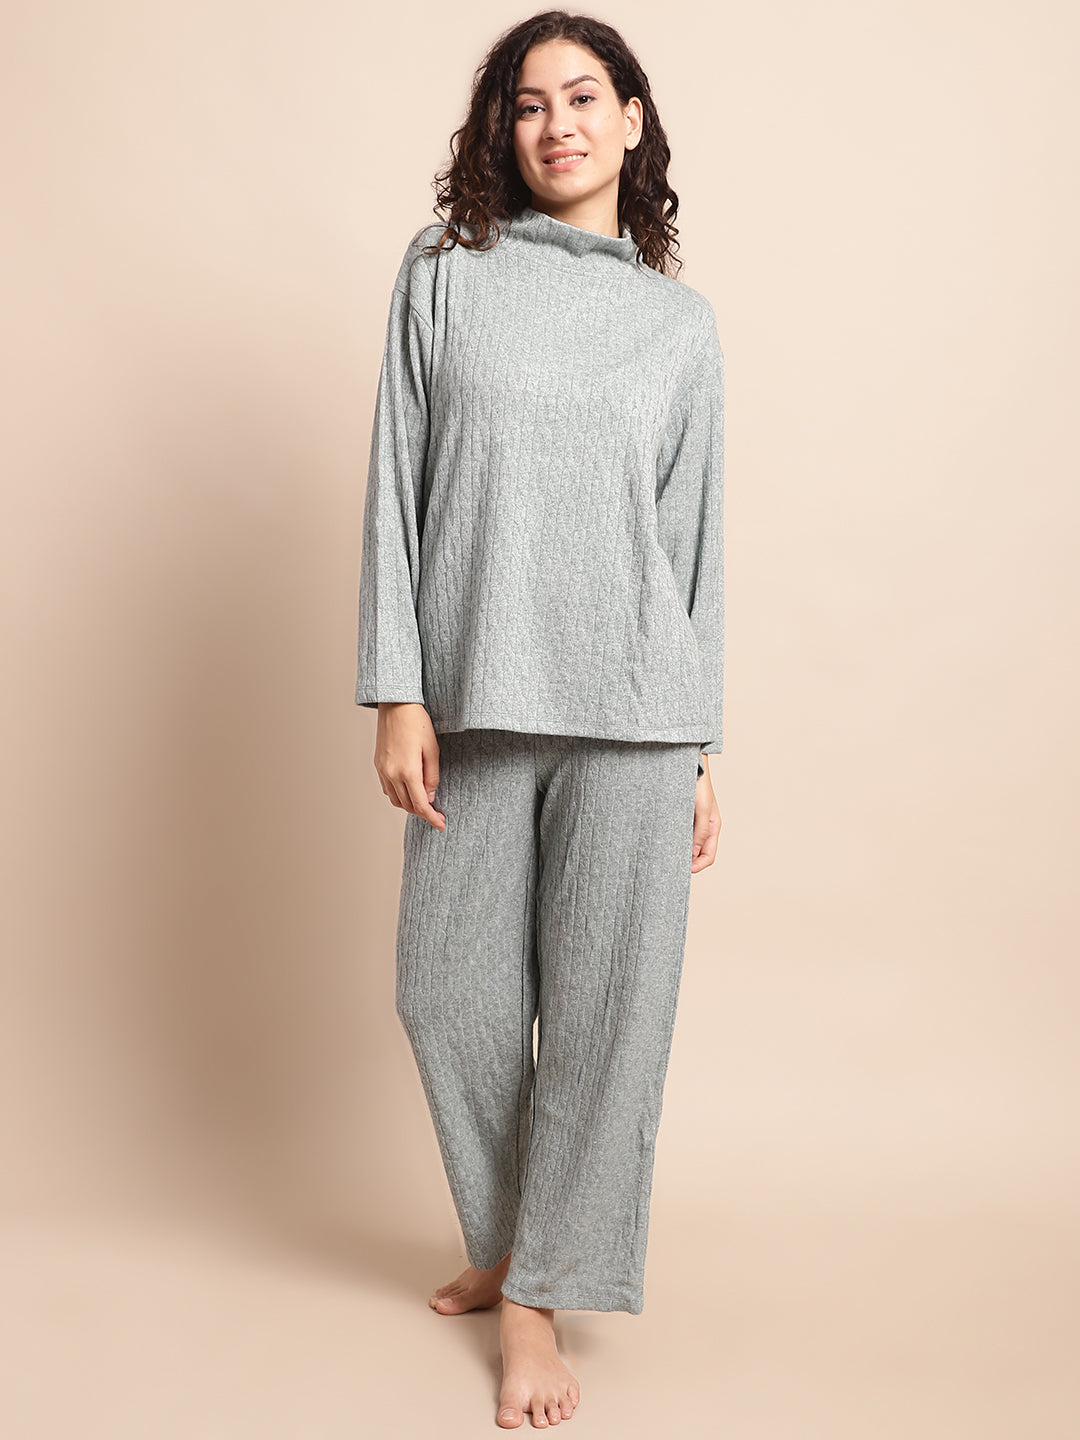 Soft Jacquard - Winterwear - MJKAW23525C